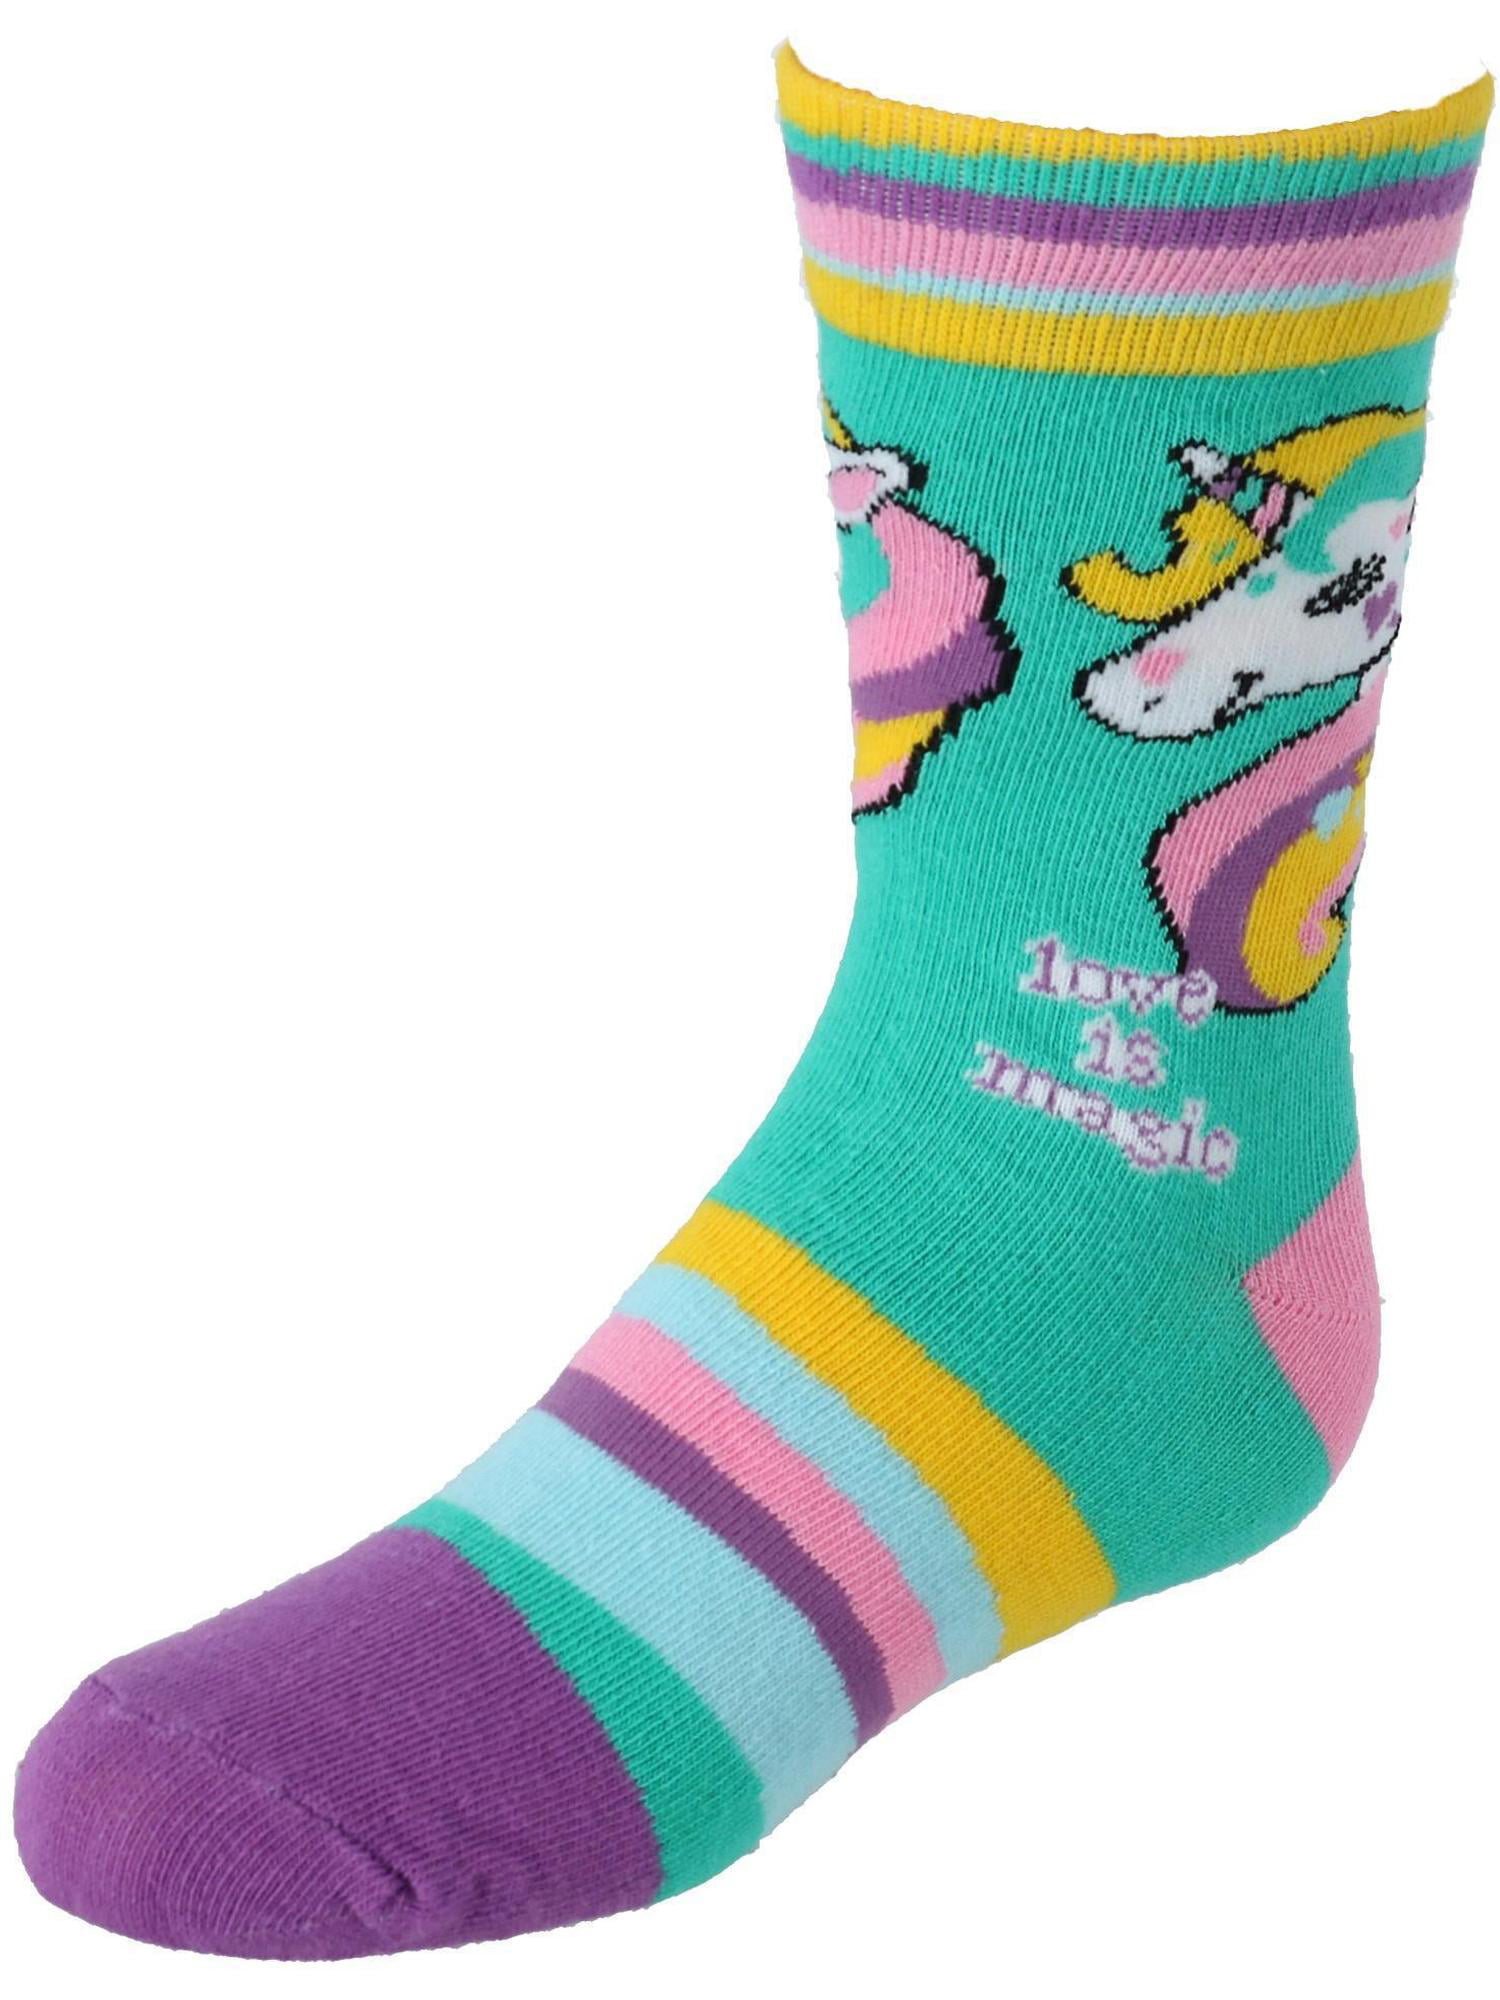 Two Left Feet Kids Novelty Crew Socks - Walmart.com